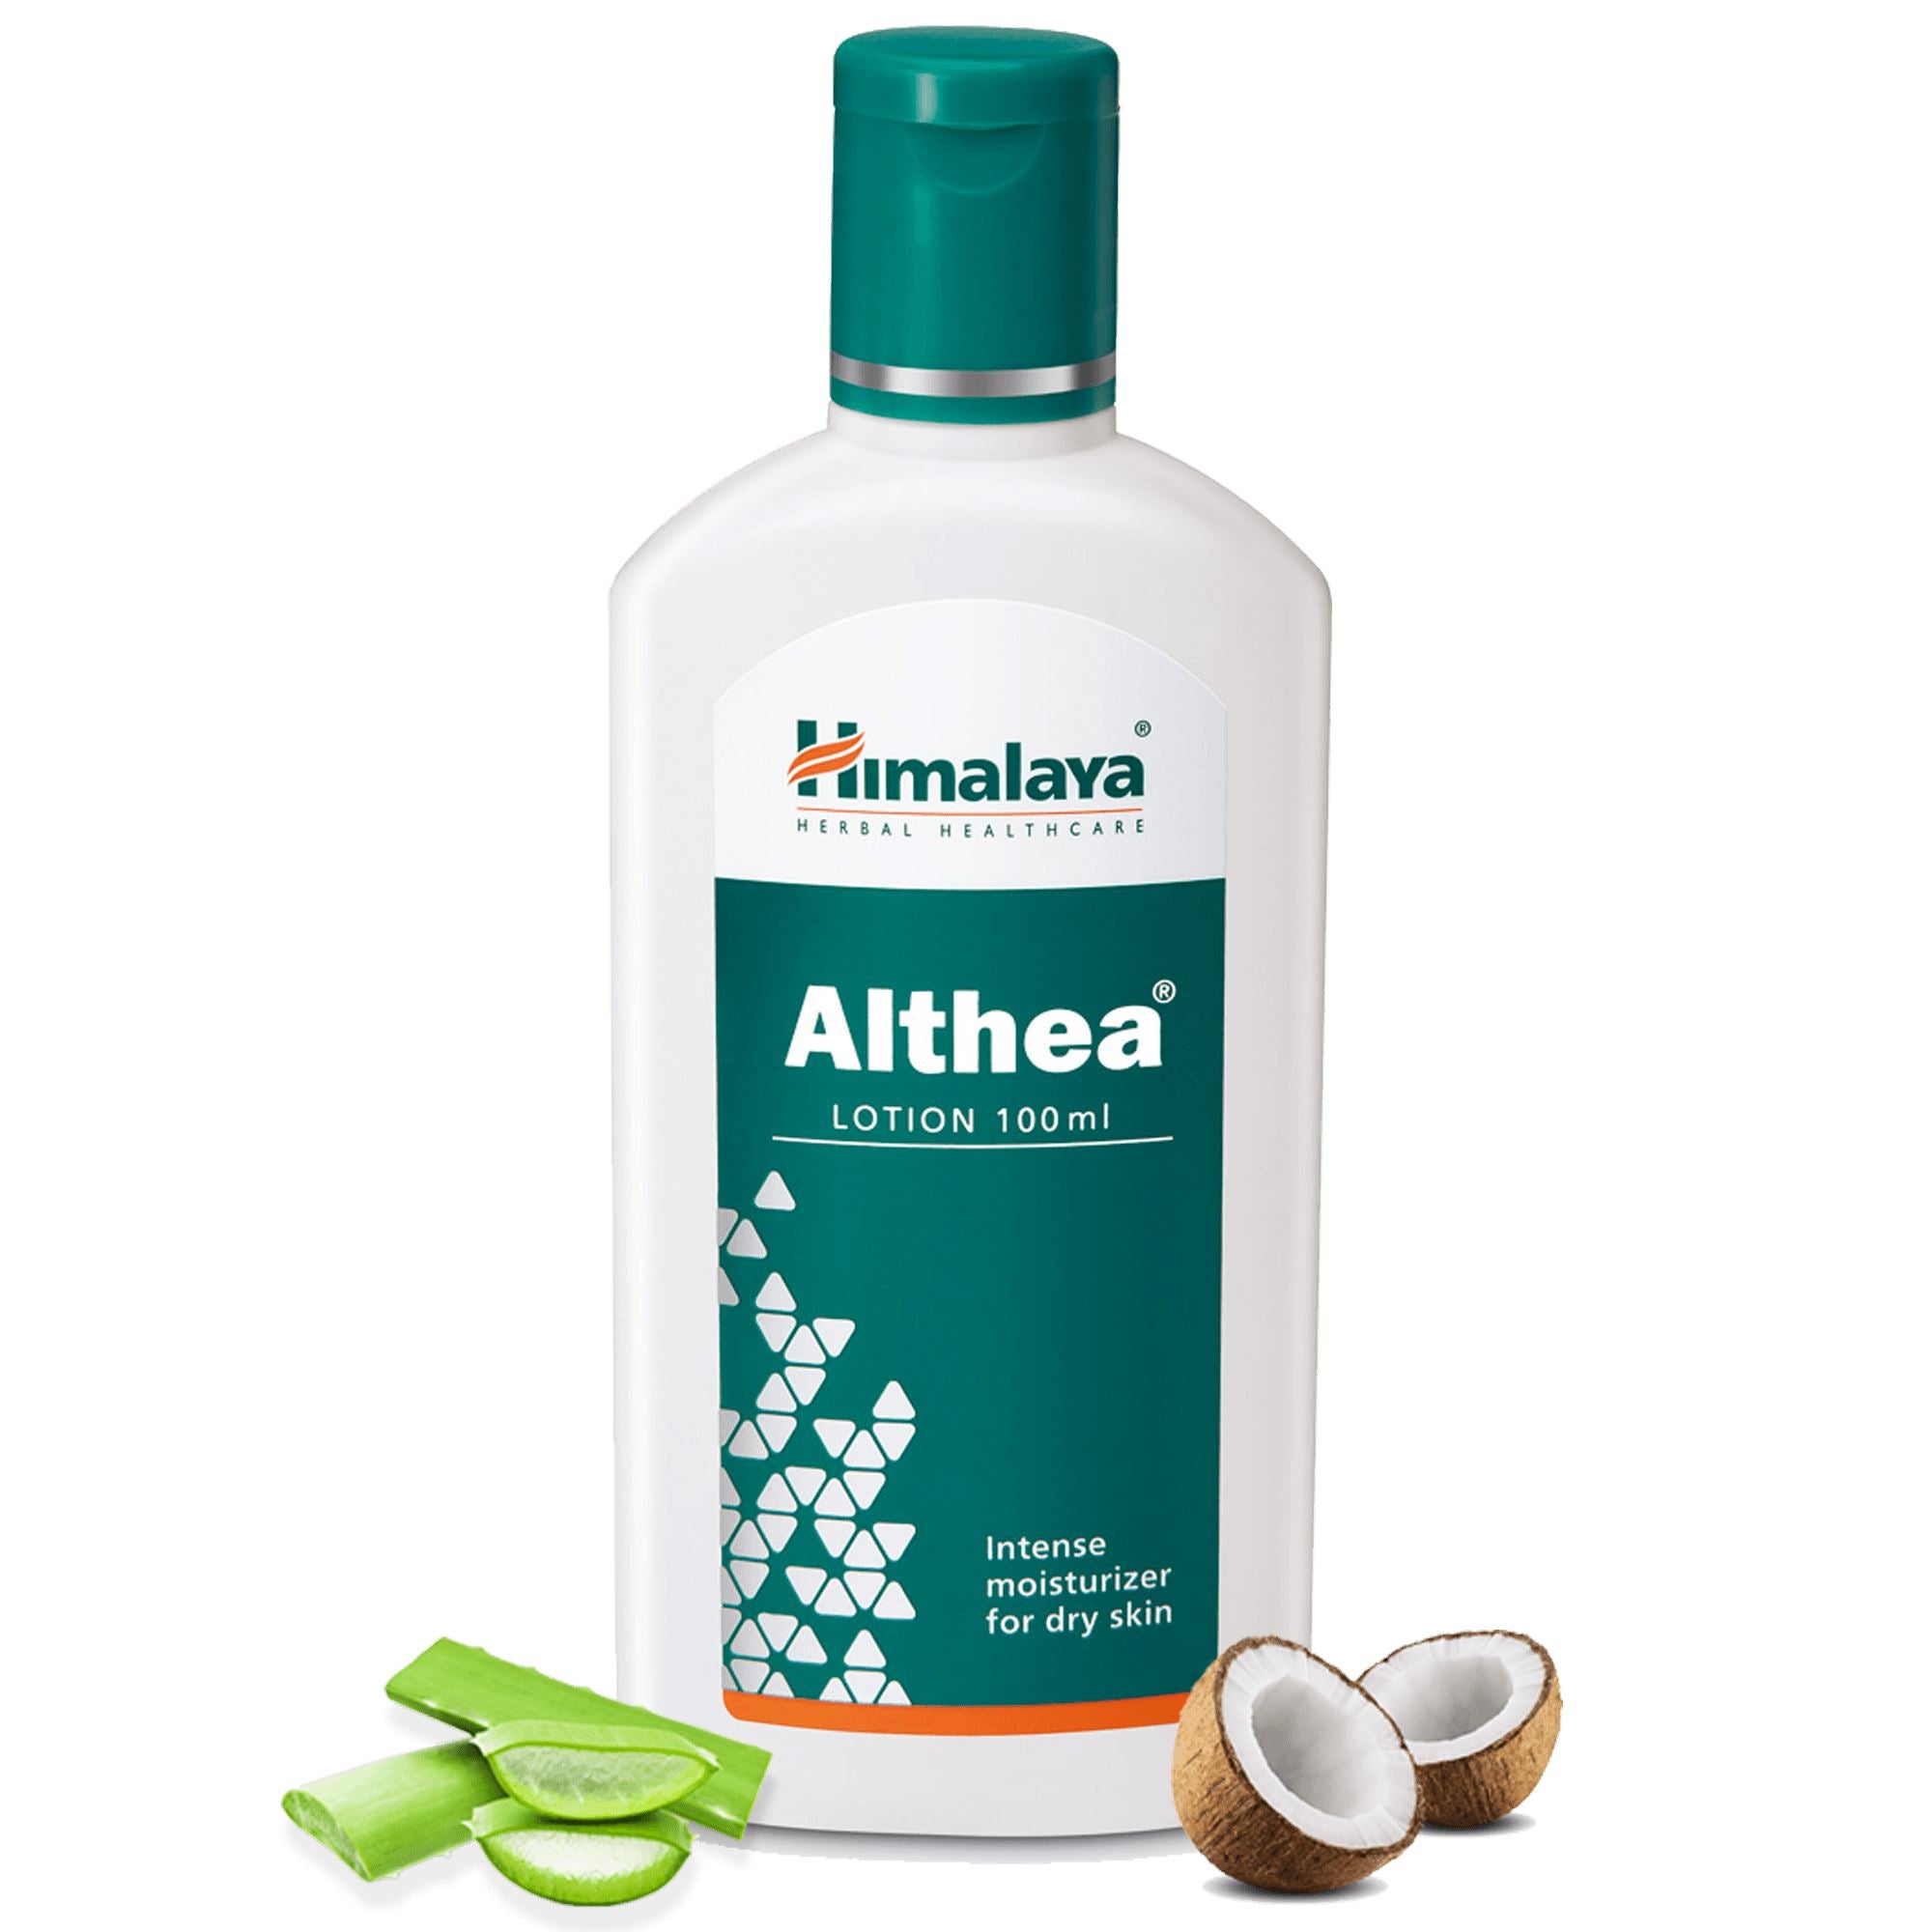 Himalaya Althea Lotion - Intense moisturizer for dry skin